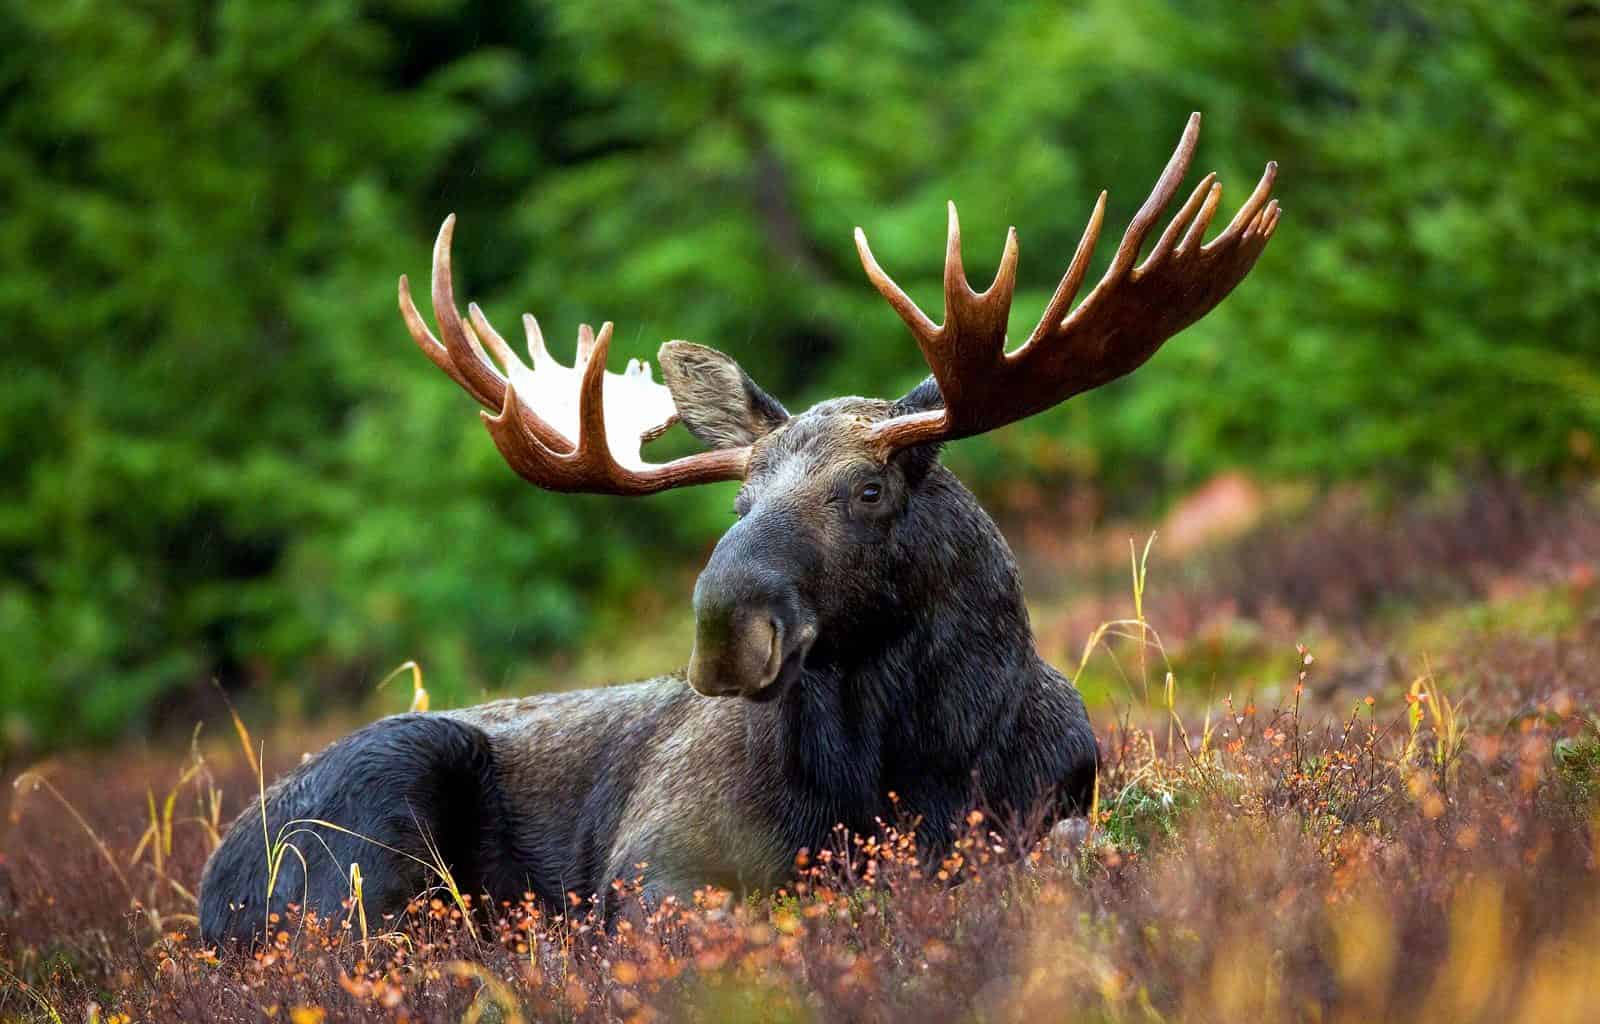 Moose as a part of European Wilderness!